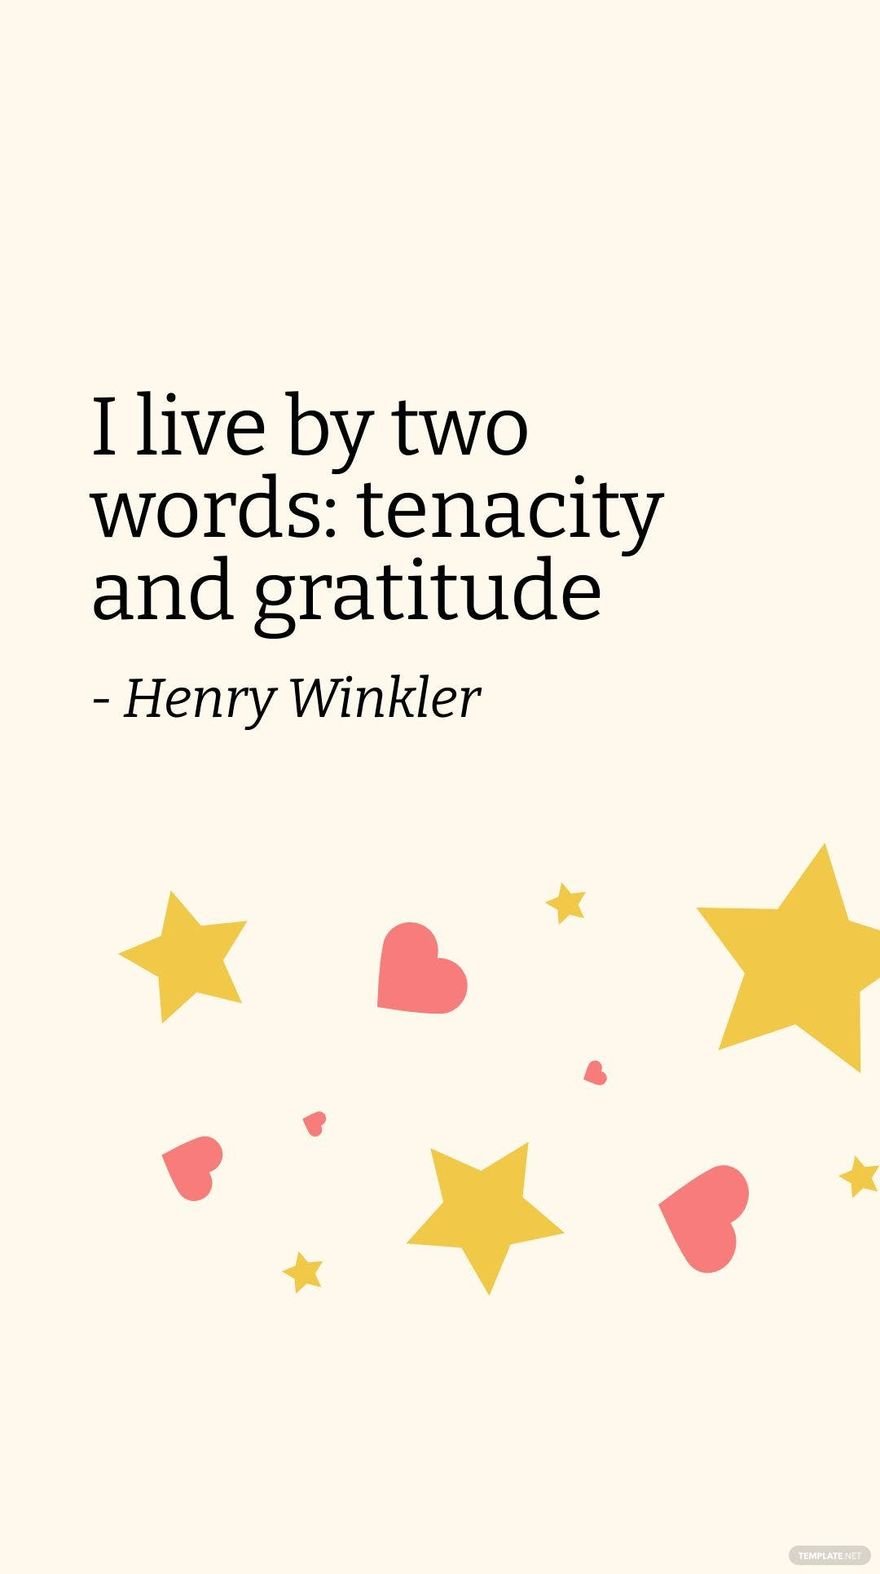 Henry Winkler - I live by two words: tenacity and gratitude in JPG